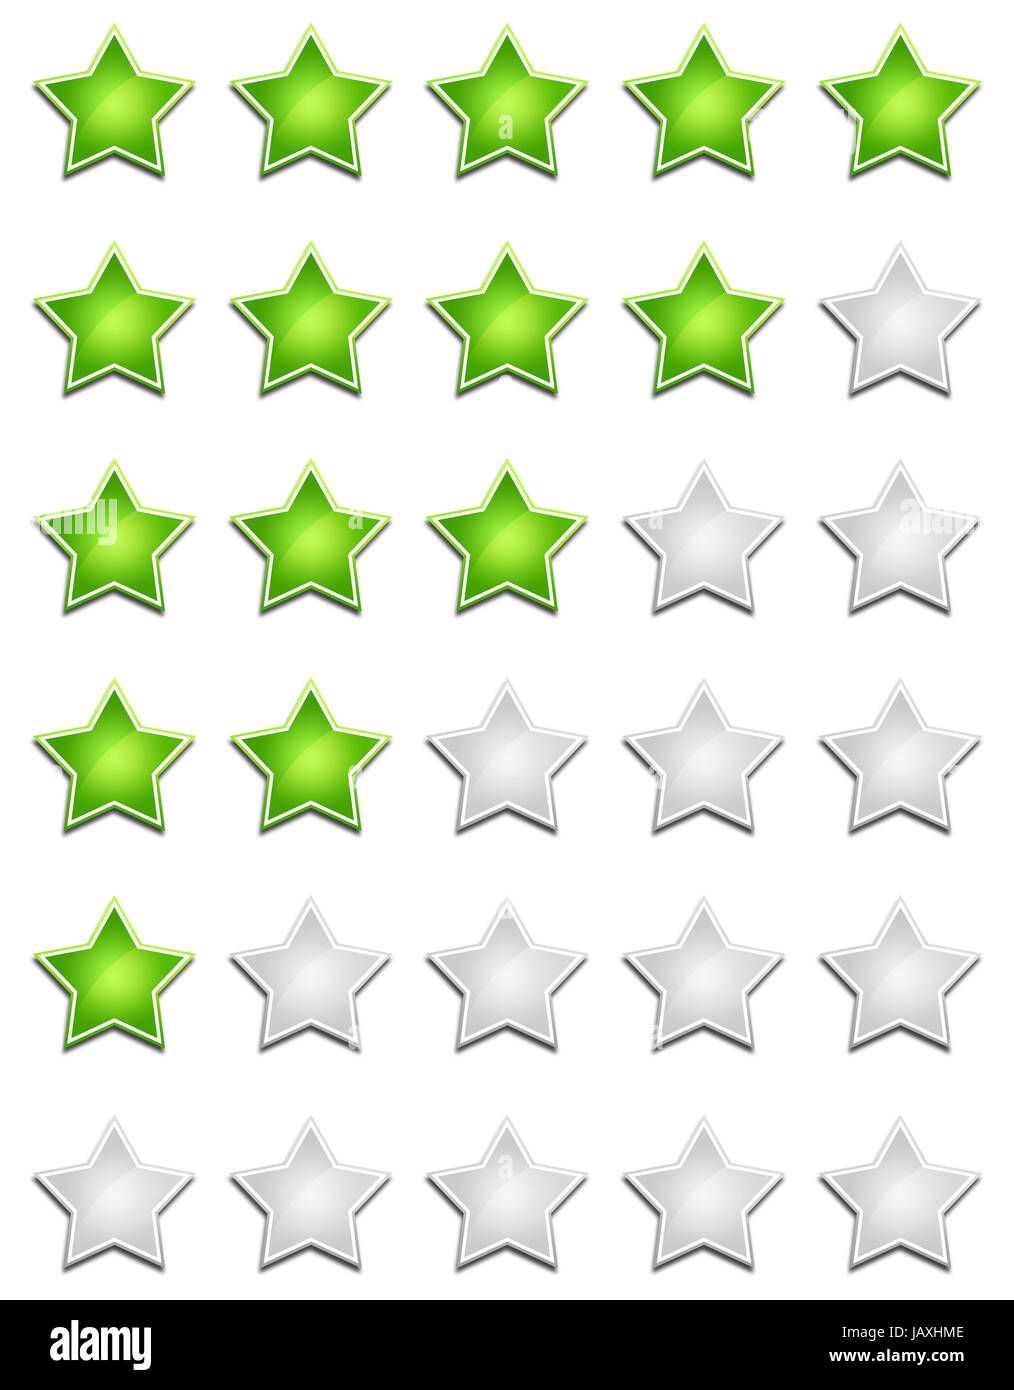 Fünf Sterne Bewertungssystem - Grün Grau Stock Photo